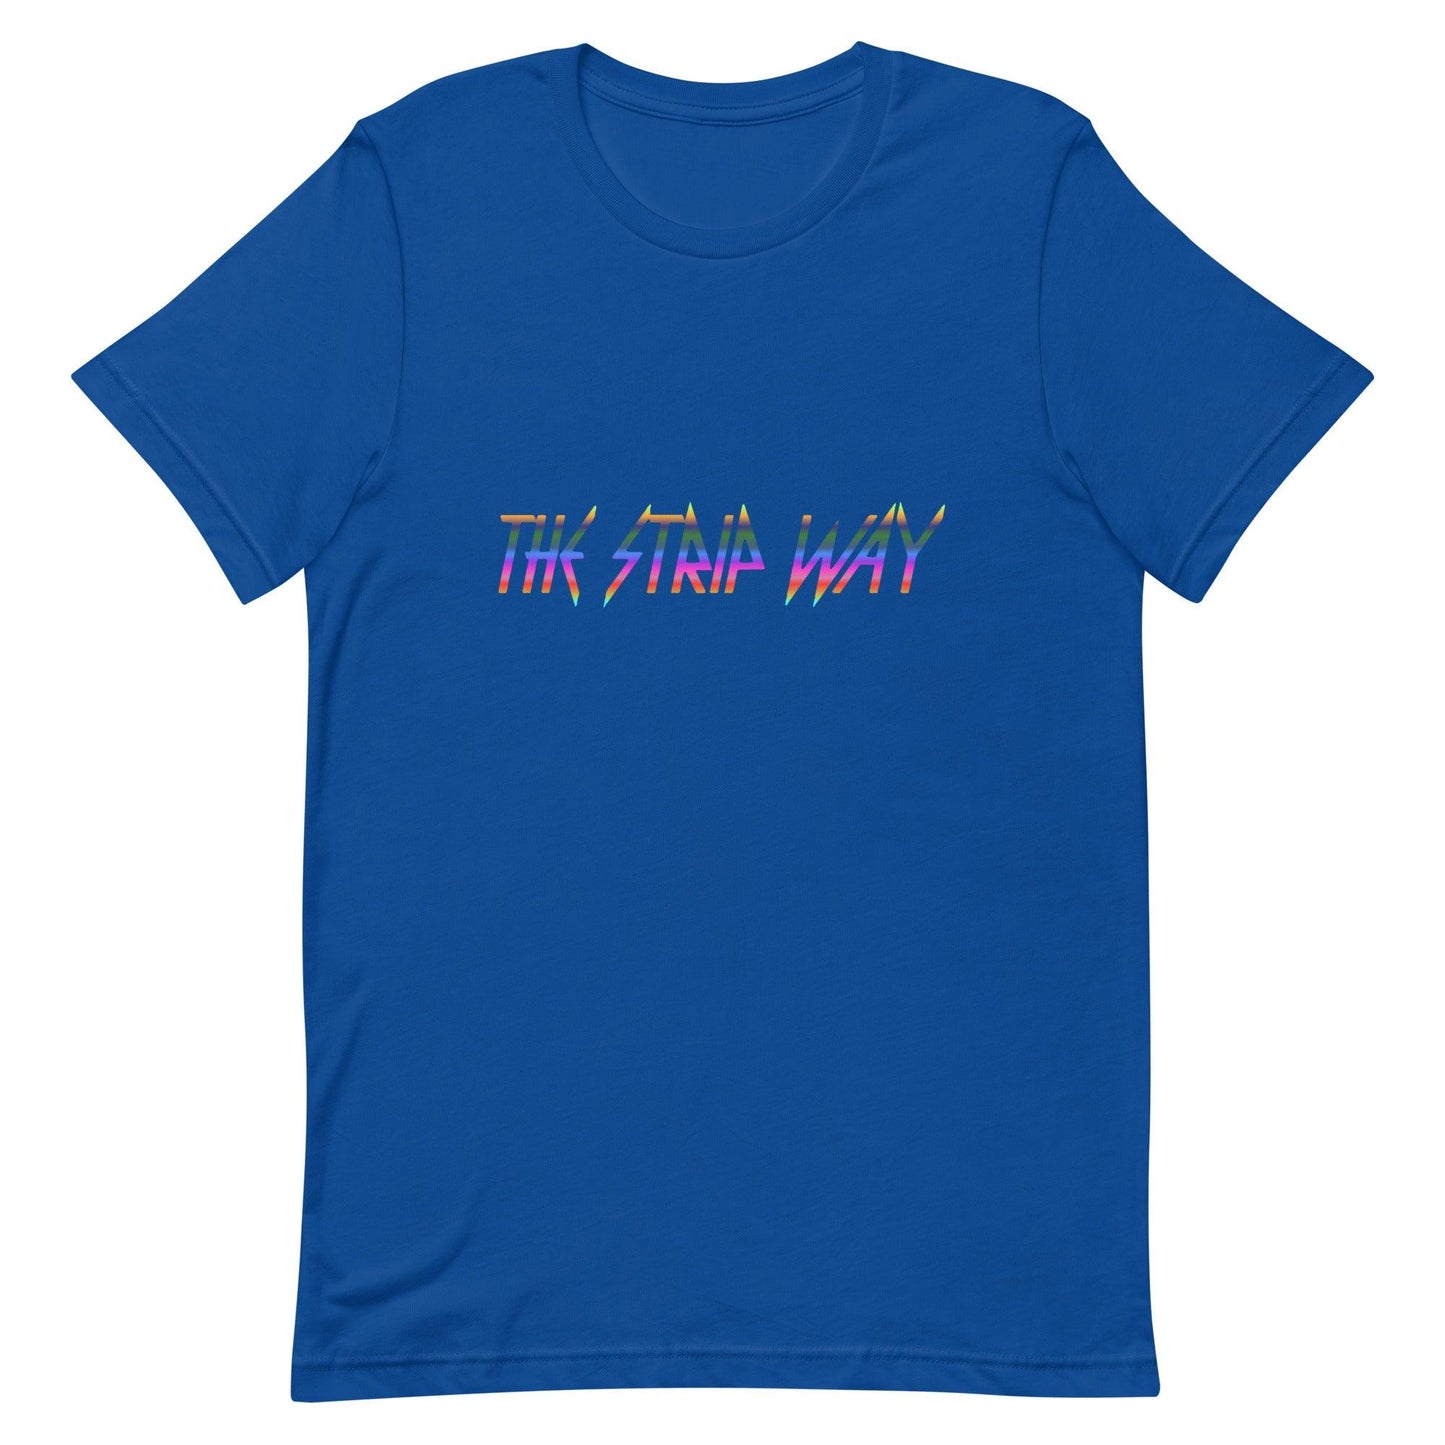 Marcus Stripling "The Strip Way" t-shirt - Fan Arch